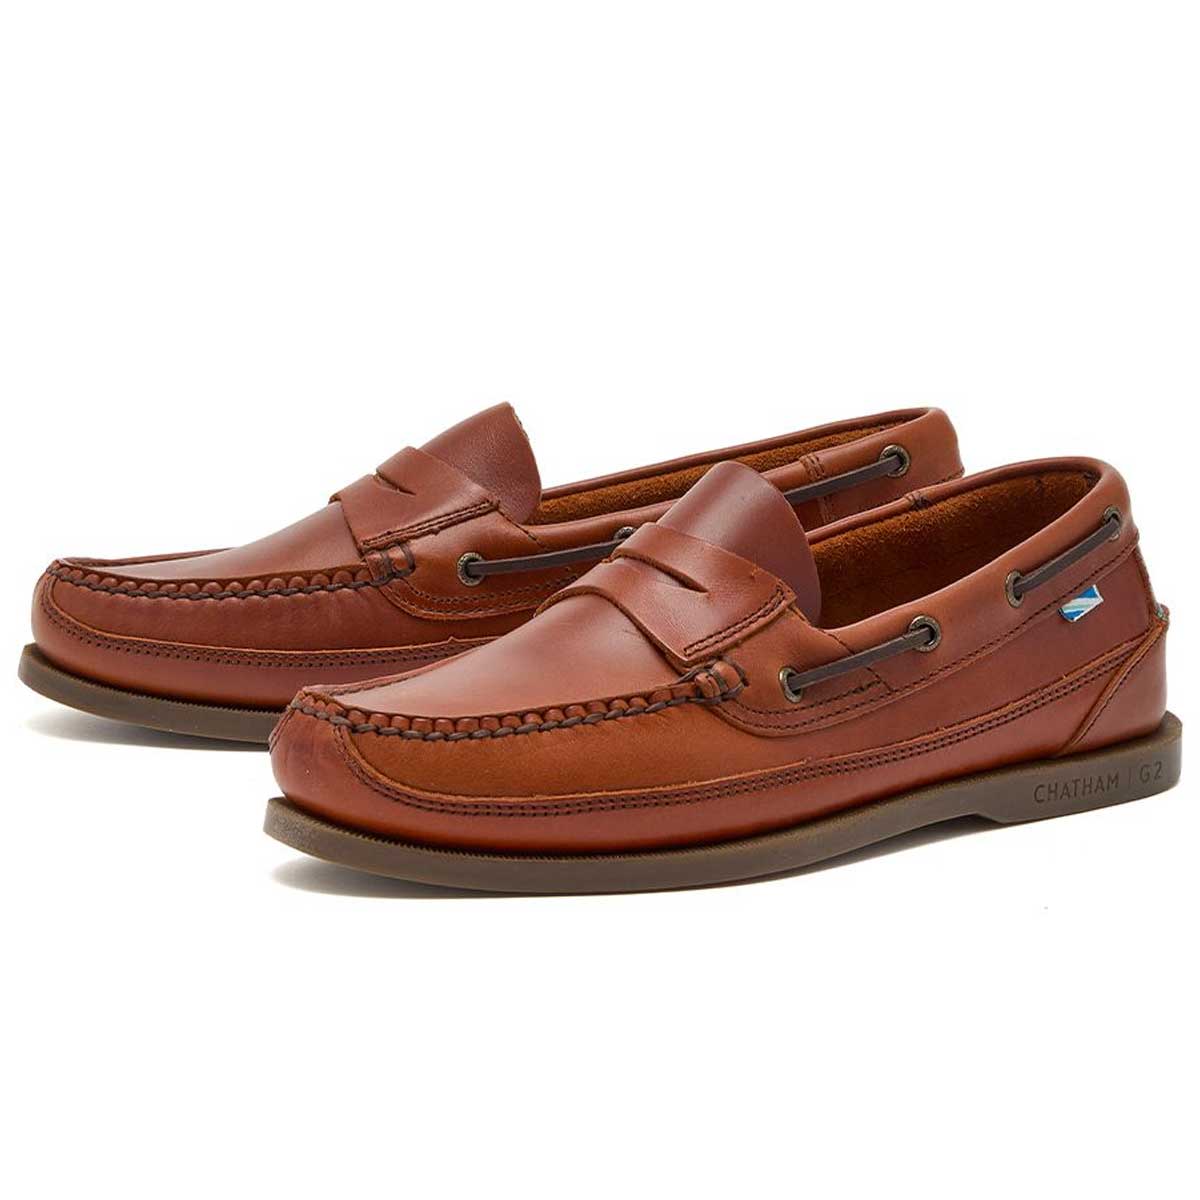 CHATHAM Gaff II G2 Slip-On Leather Deck Shoes - Mens - Chestnut